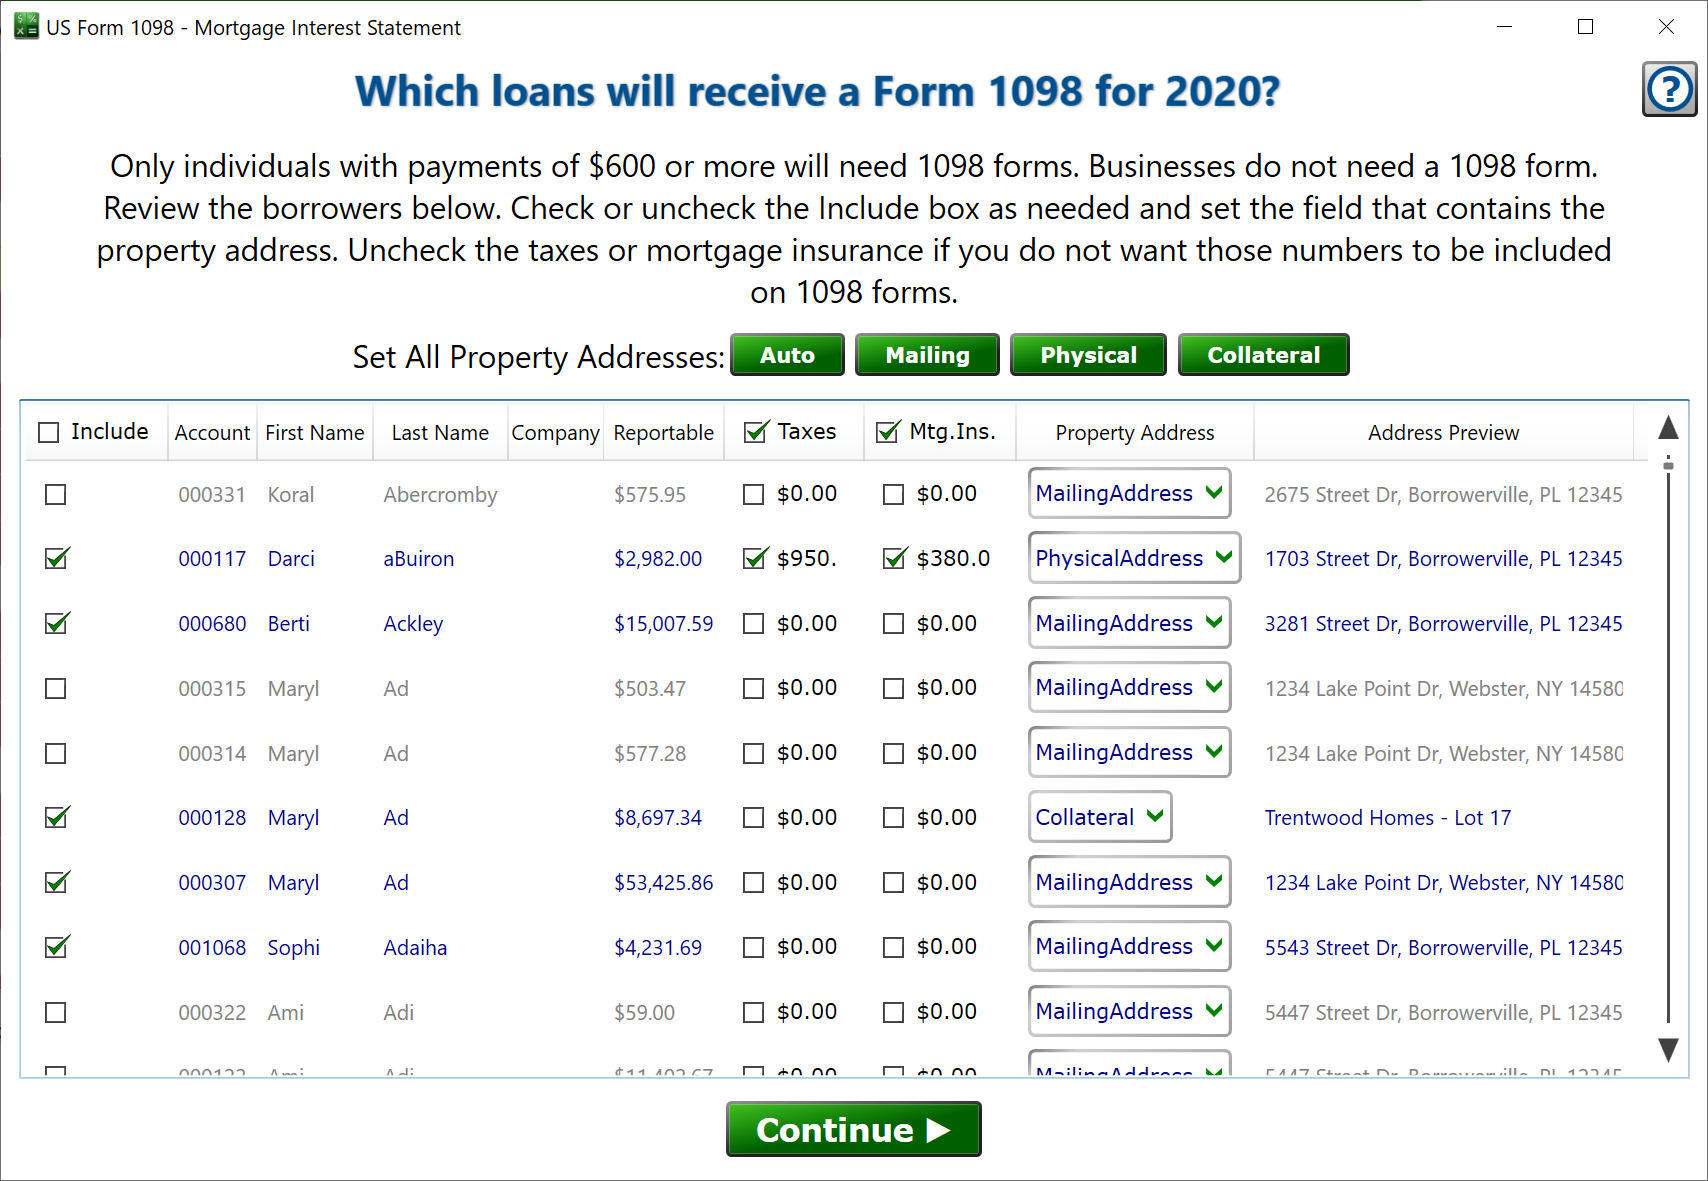 loans receiving a form 1098